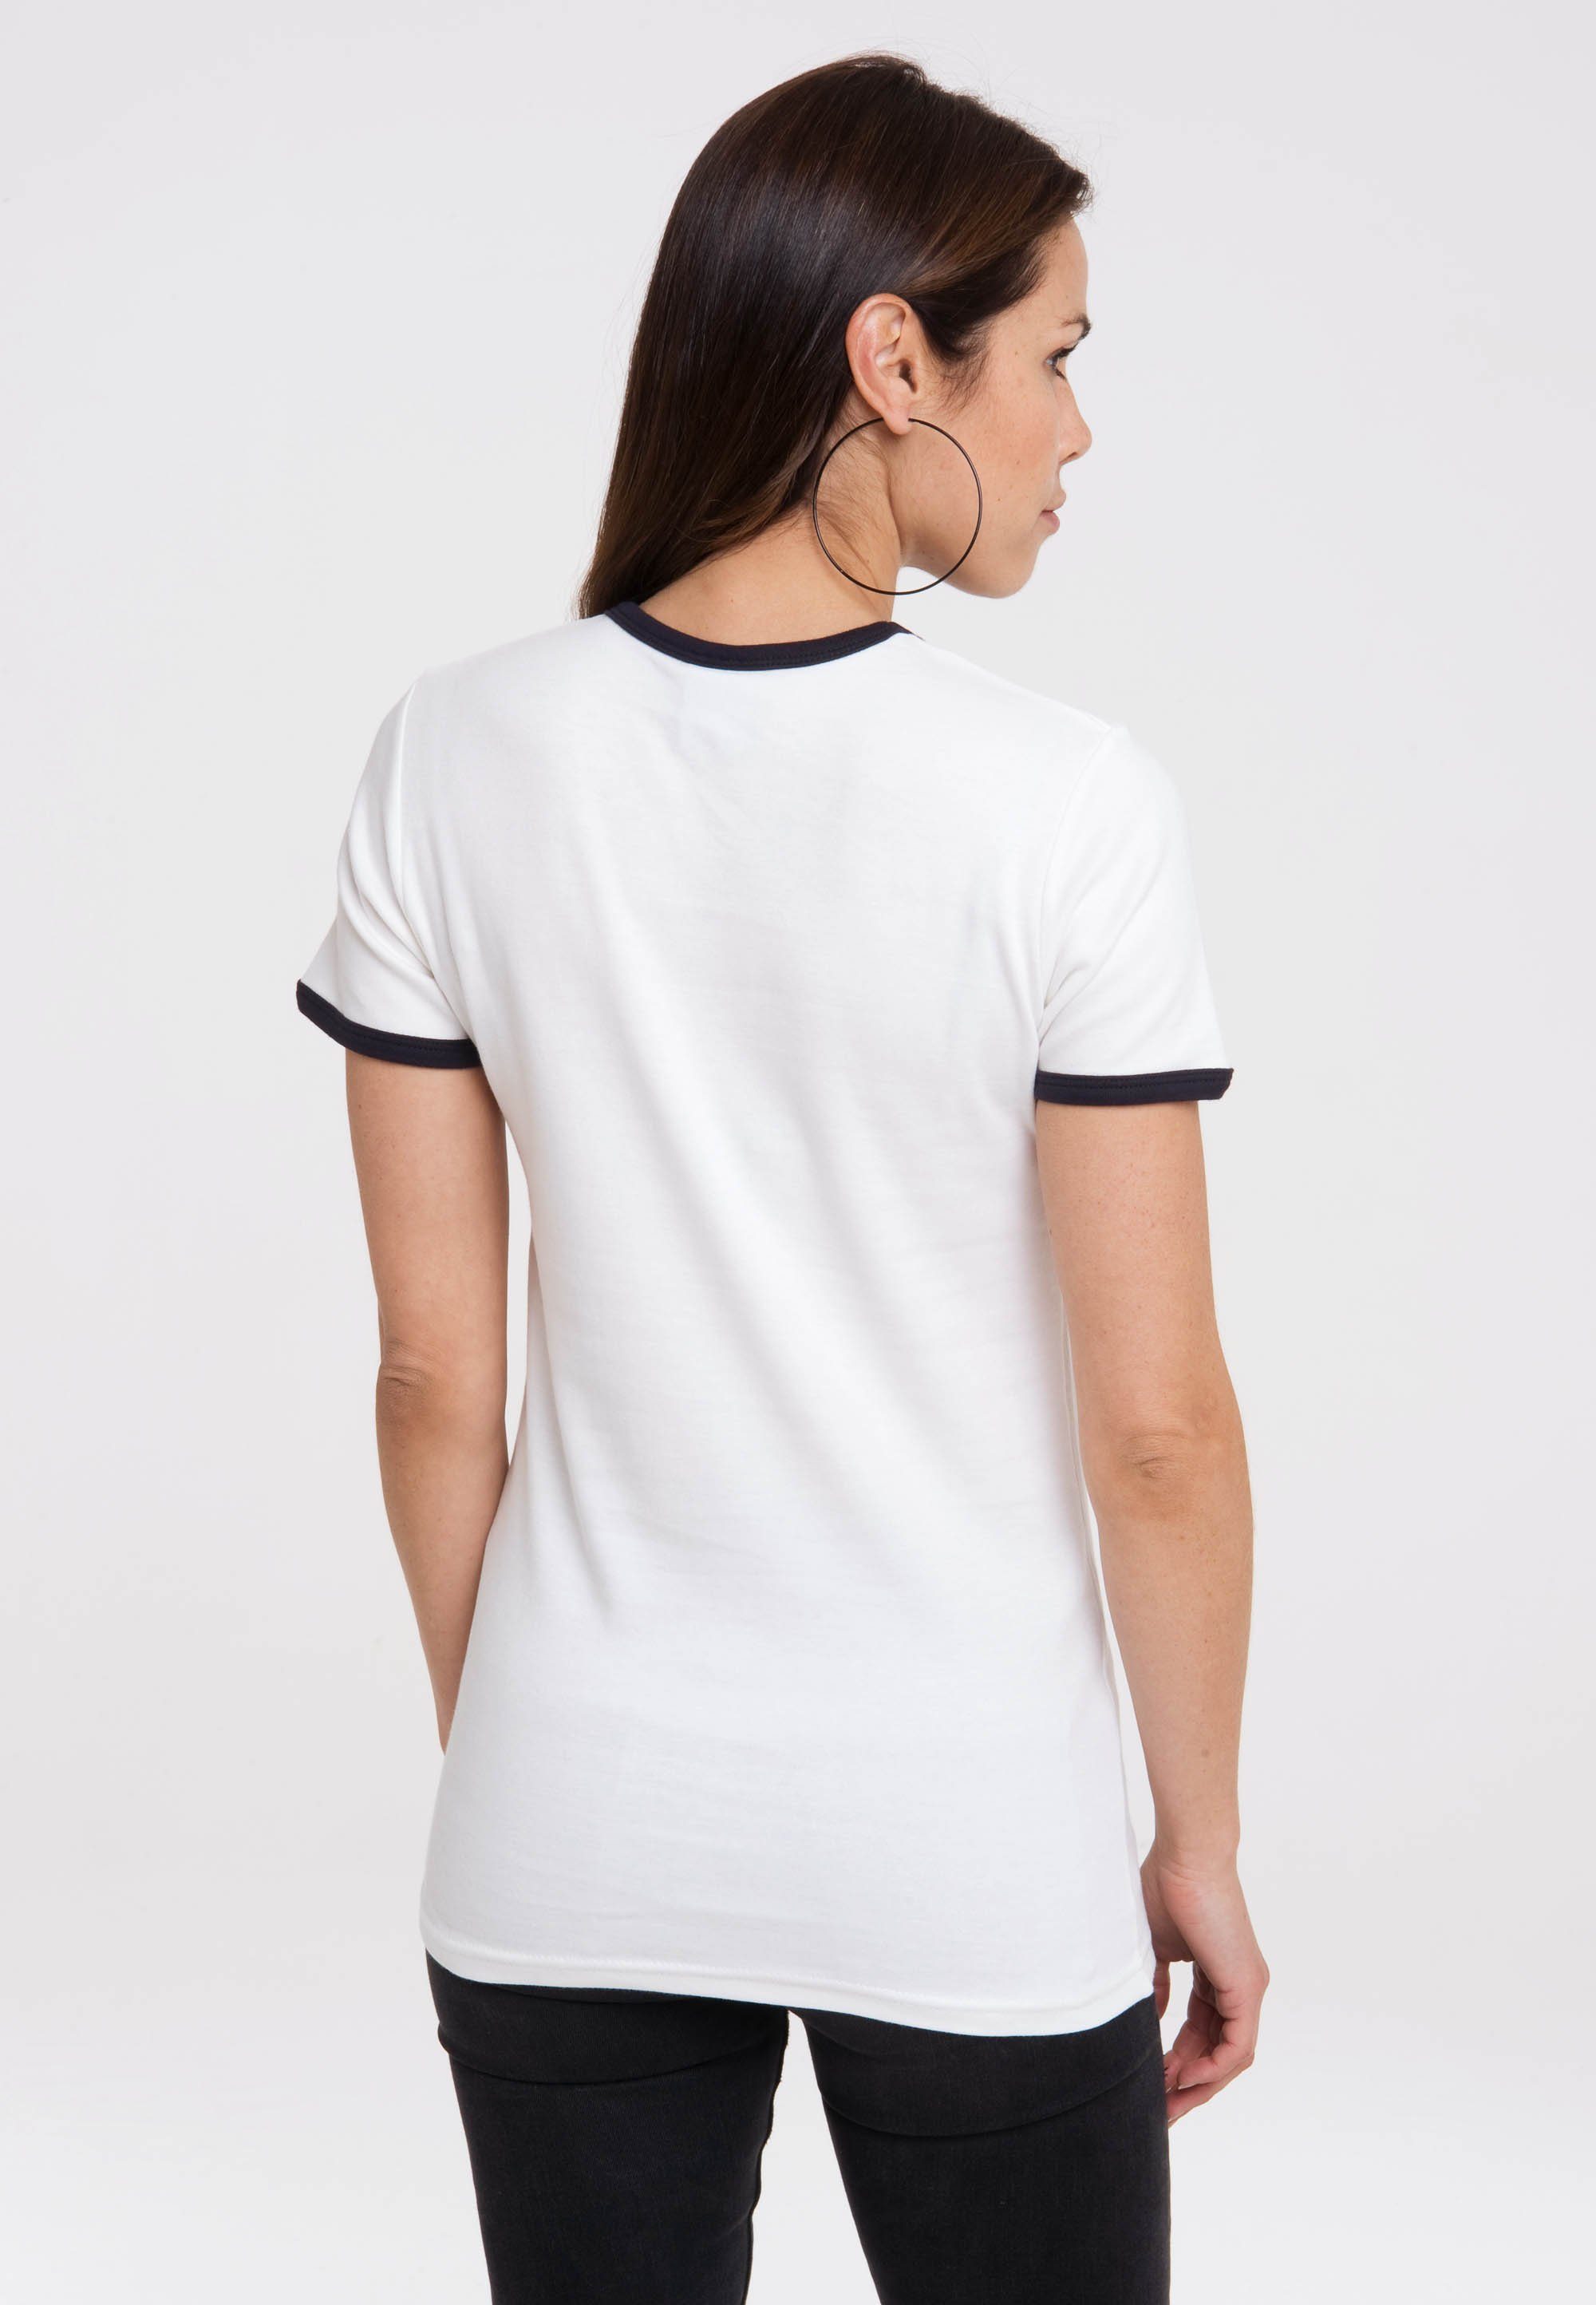 Sesamstrasse Krümelmonster - weiß, Print LOGOSHIRT dunkelblau T-Shirt mit lizenziertem